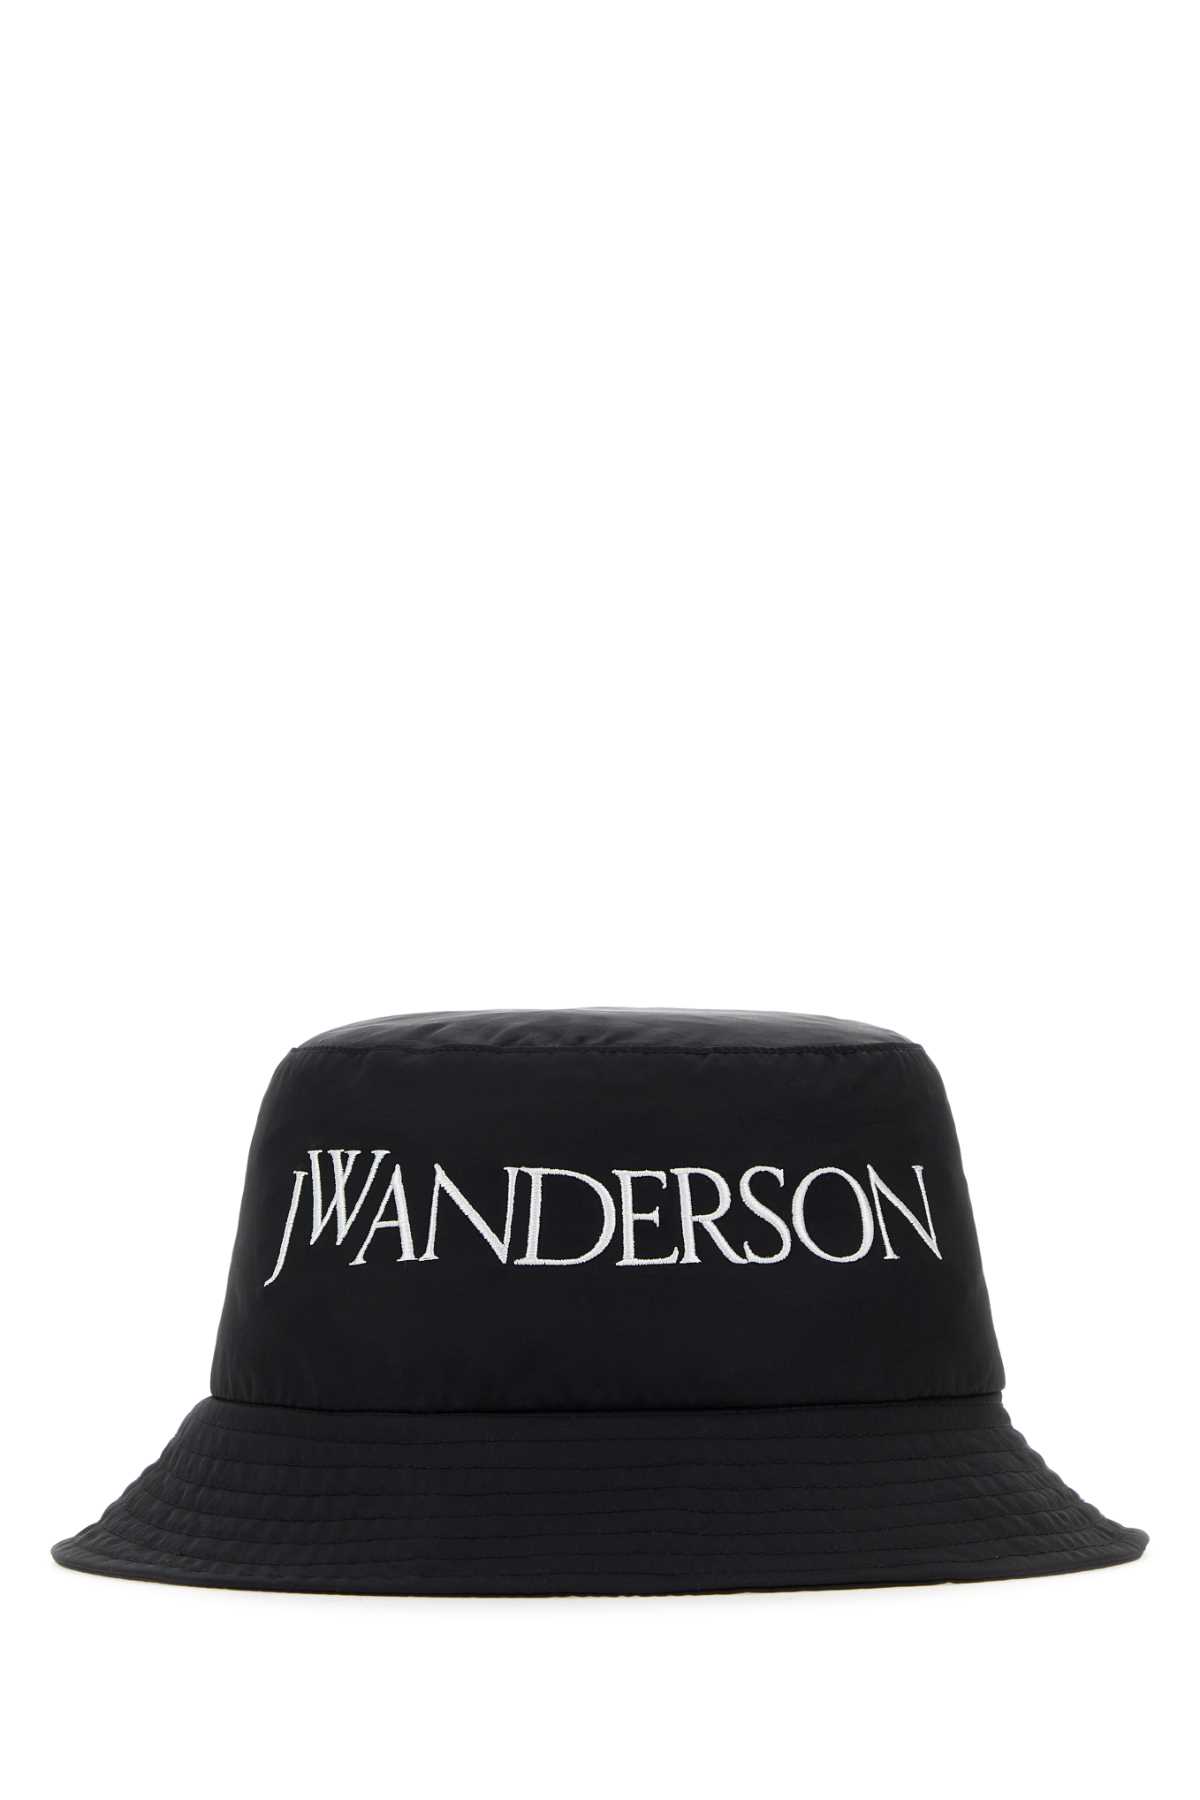 J.W. Anderson Black Nylon Blend Bucket Hat